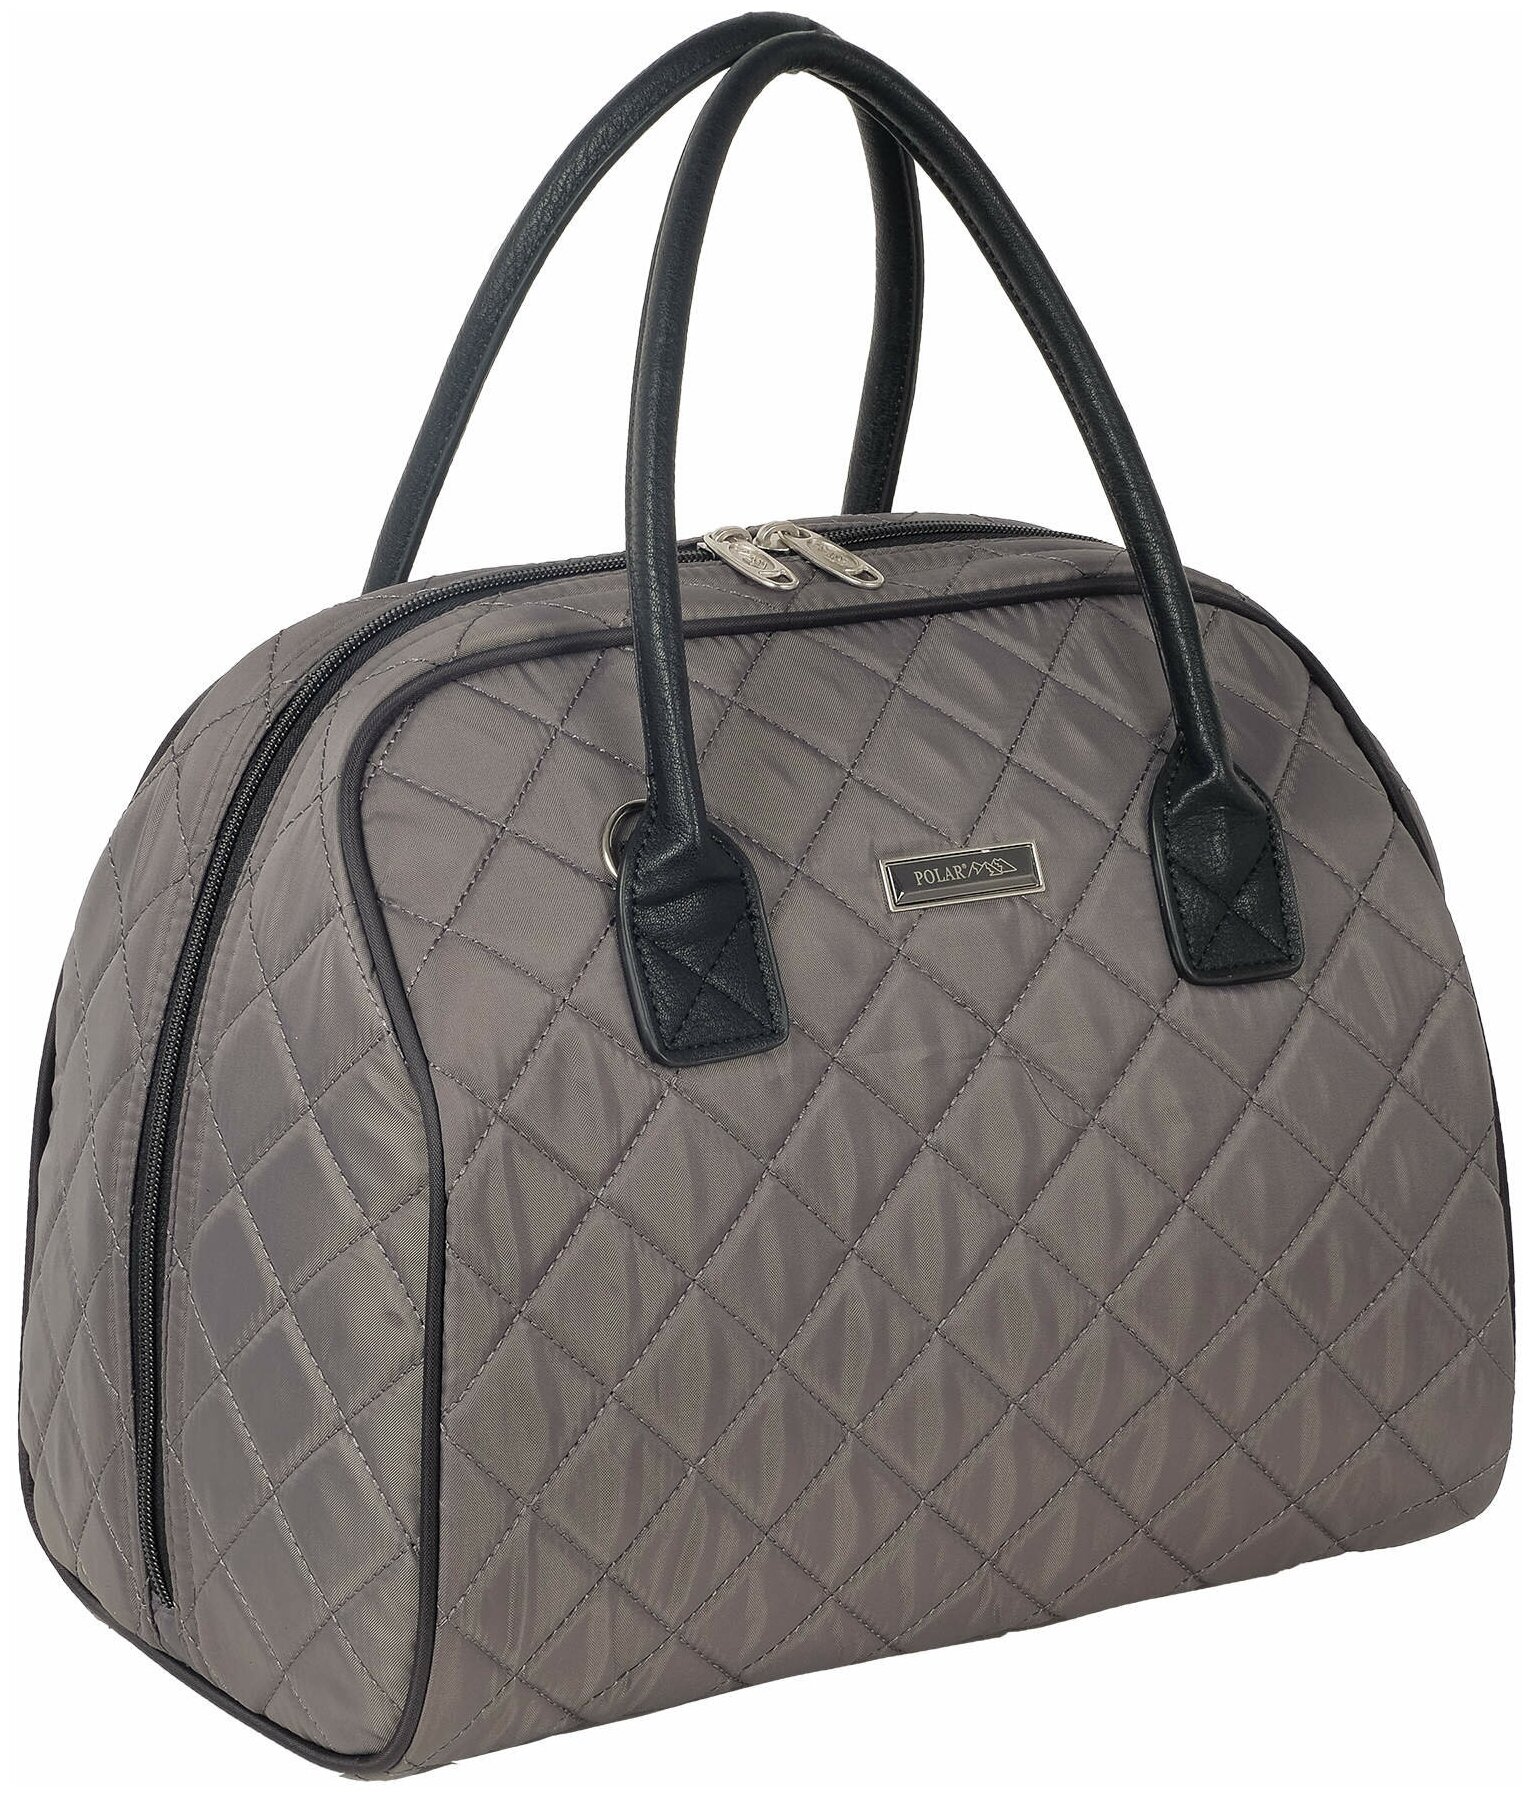 Дорожная сумка POLAR, сумка на плечо,ручная кладь Победа, полиэстер, удобная сумка, стеганная 34 х 30 х 24